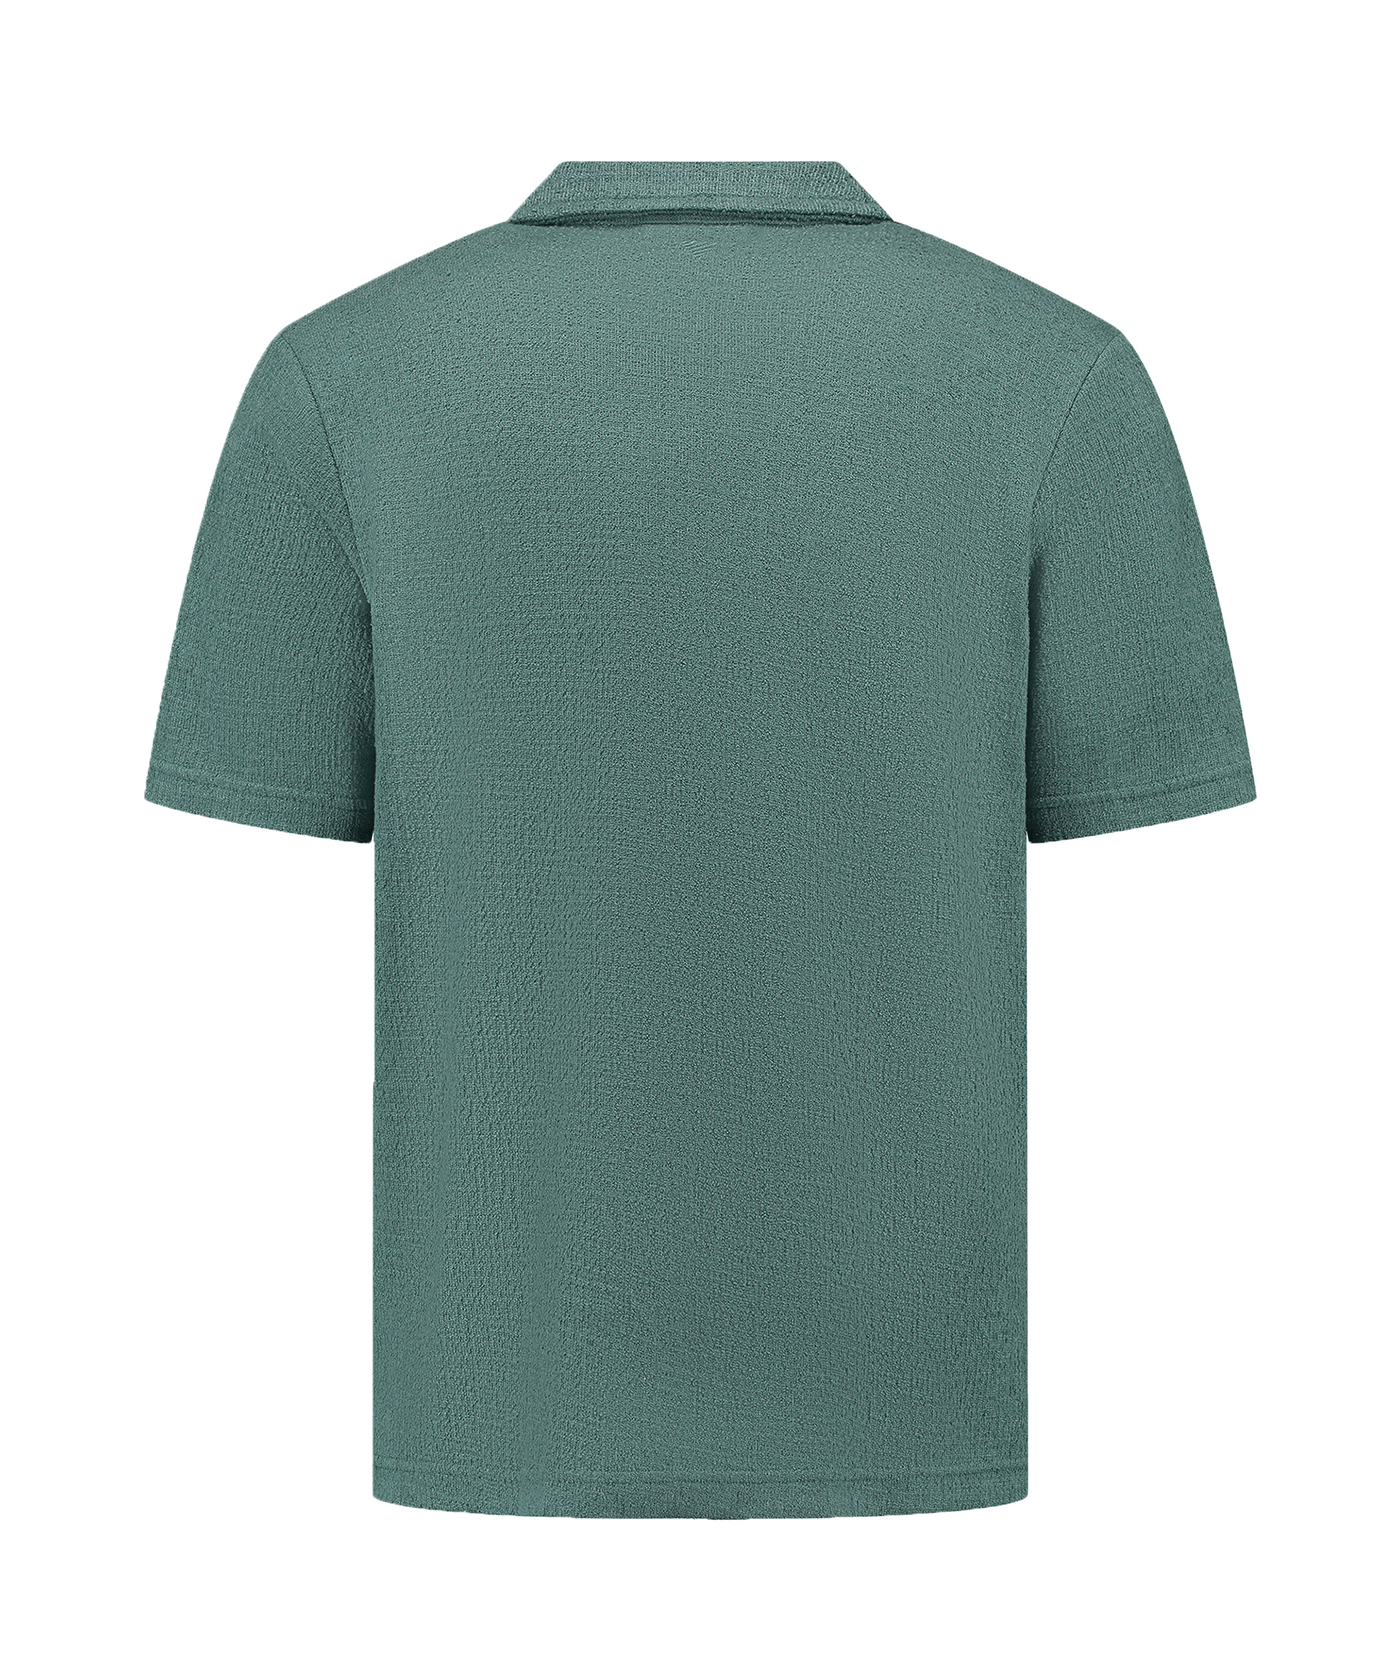 Pure Path - 24010216 - Shortsleeve Shirt - 76 Faded Green